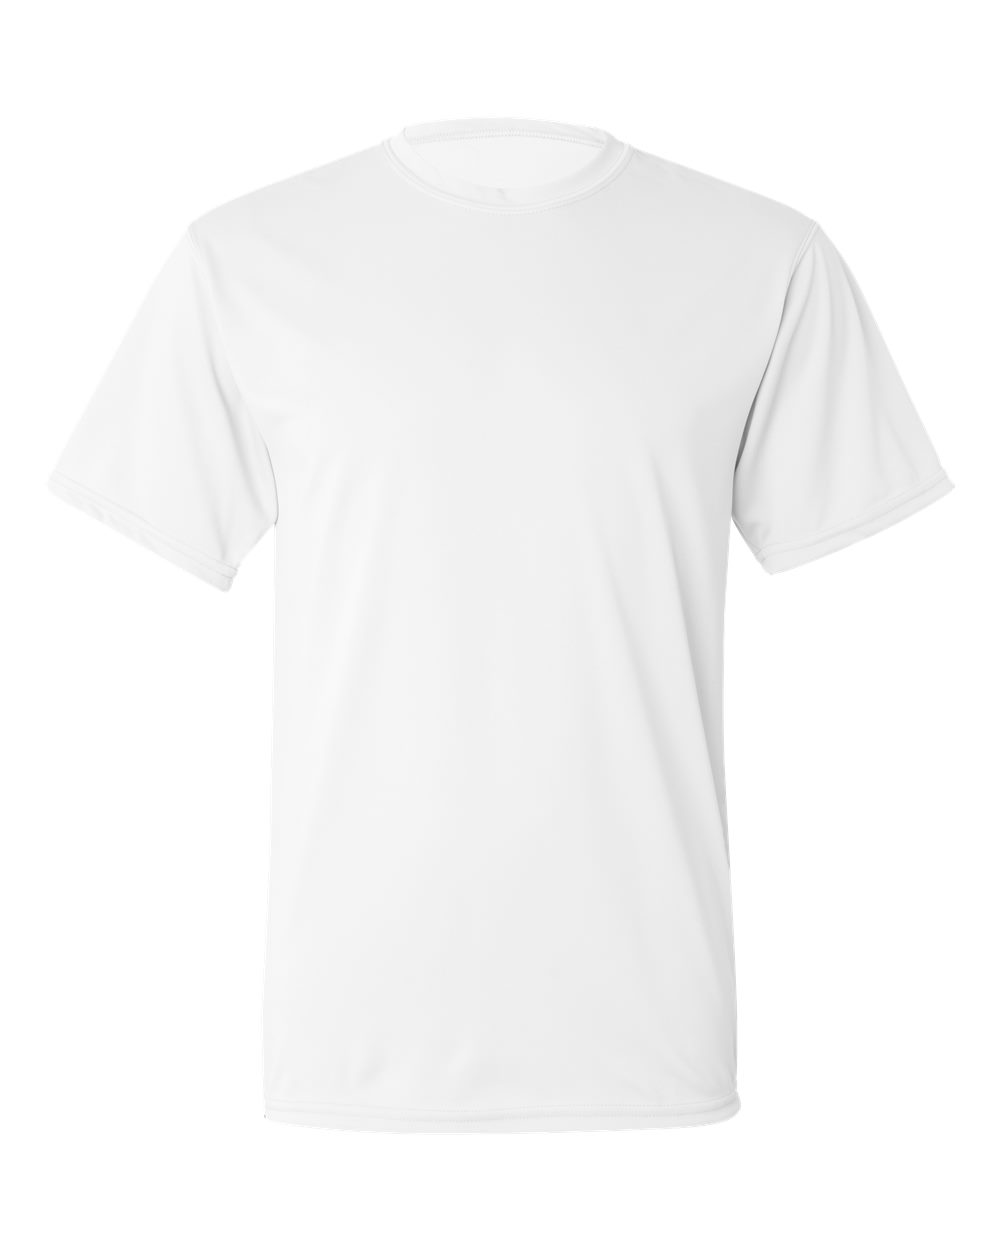 Buy 56% Savings Augusta Sportswear 790 Adult T-Shirt